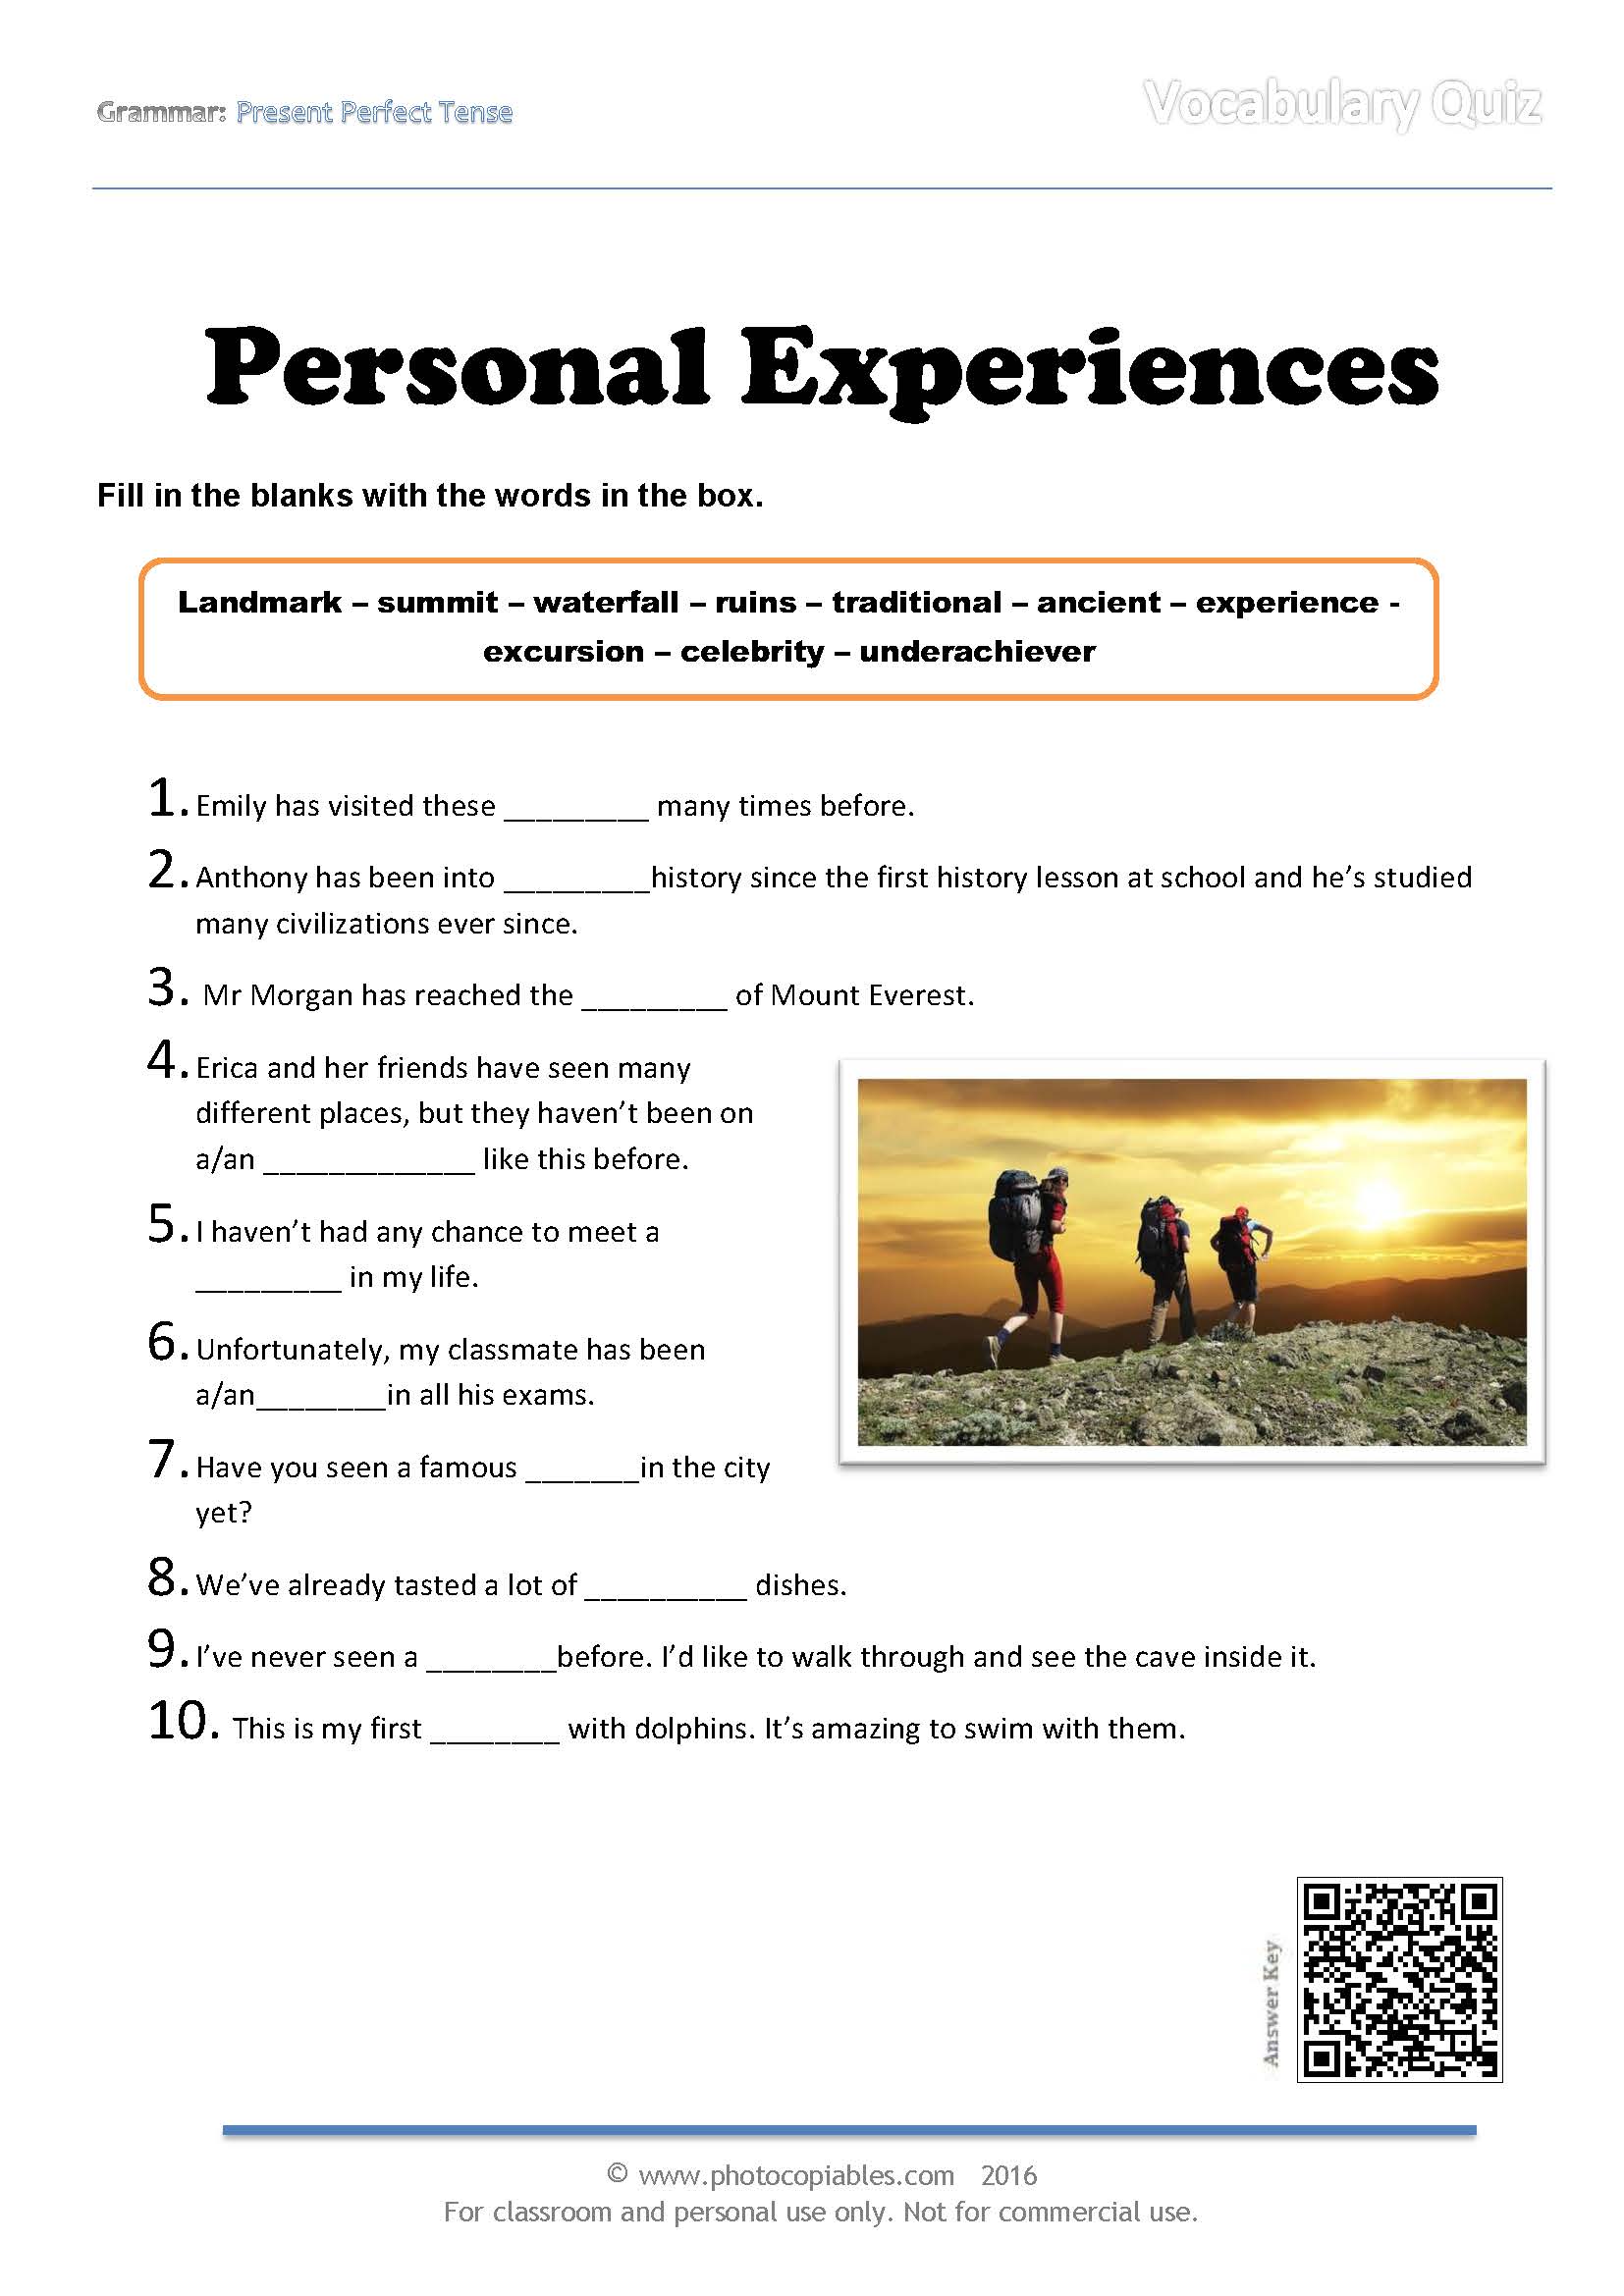 personal-experiences-vocabulary-quiz-photocopiables